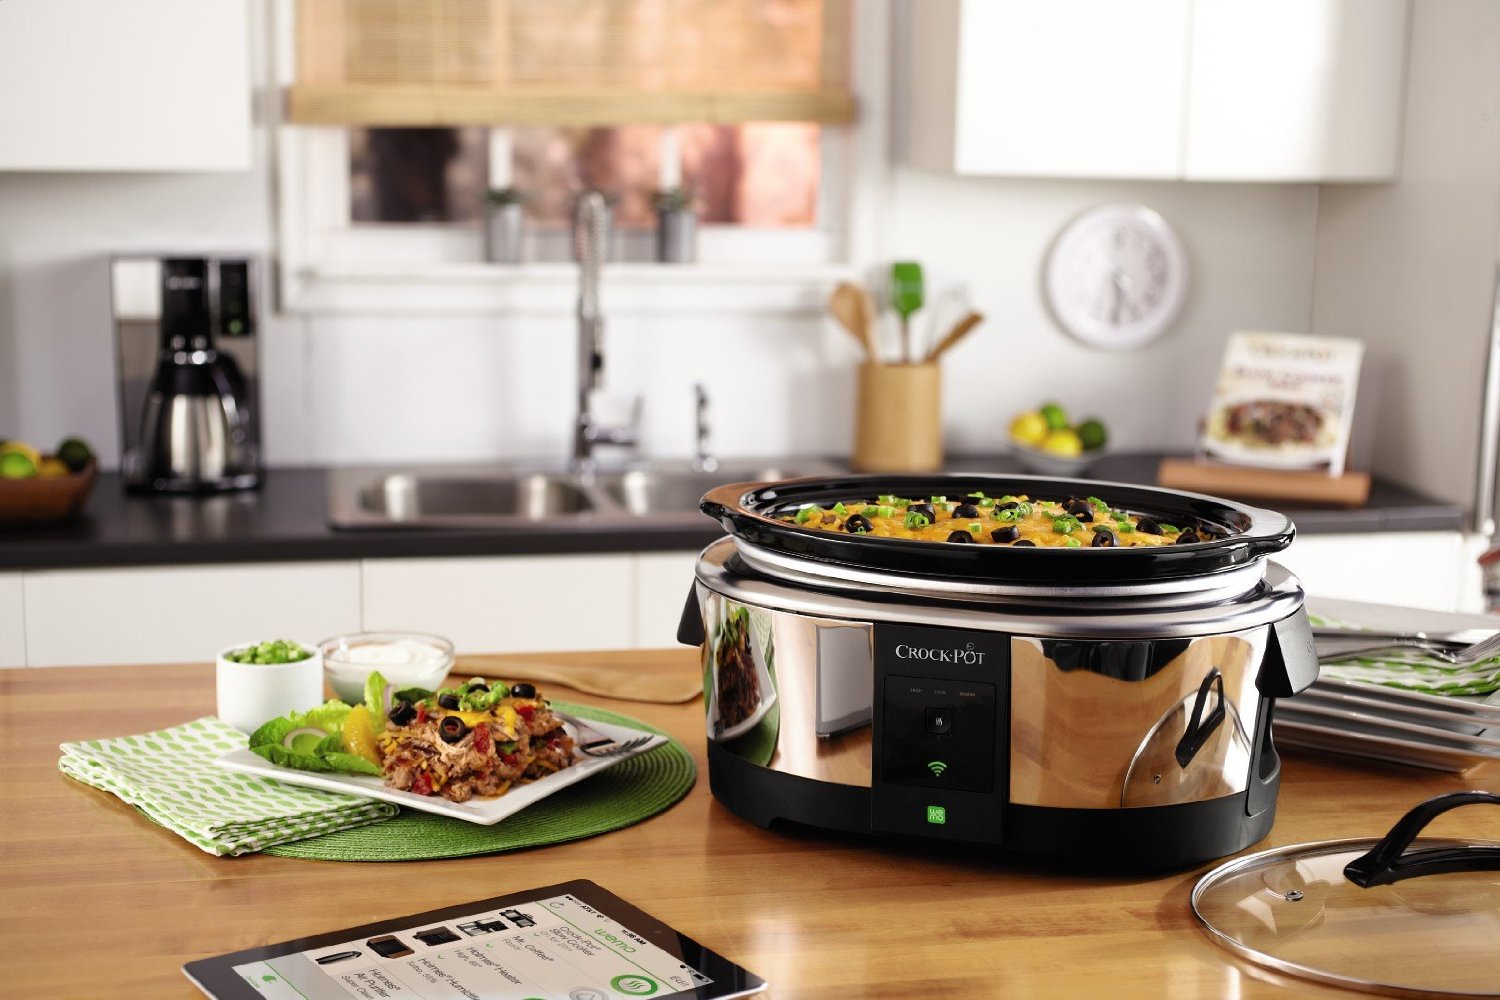 Crock-Pot WiFi enabled 6-quart slow cooker for $78